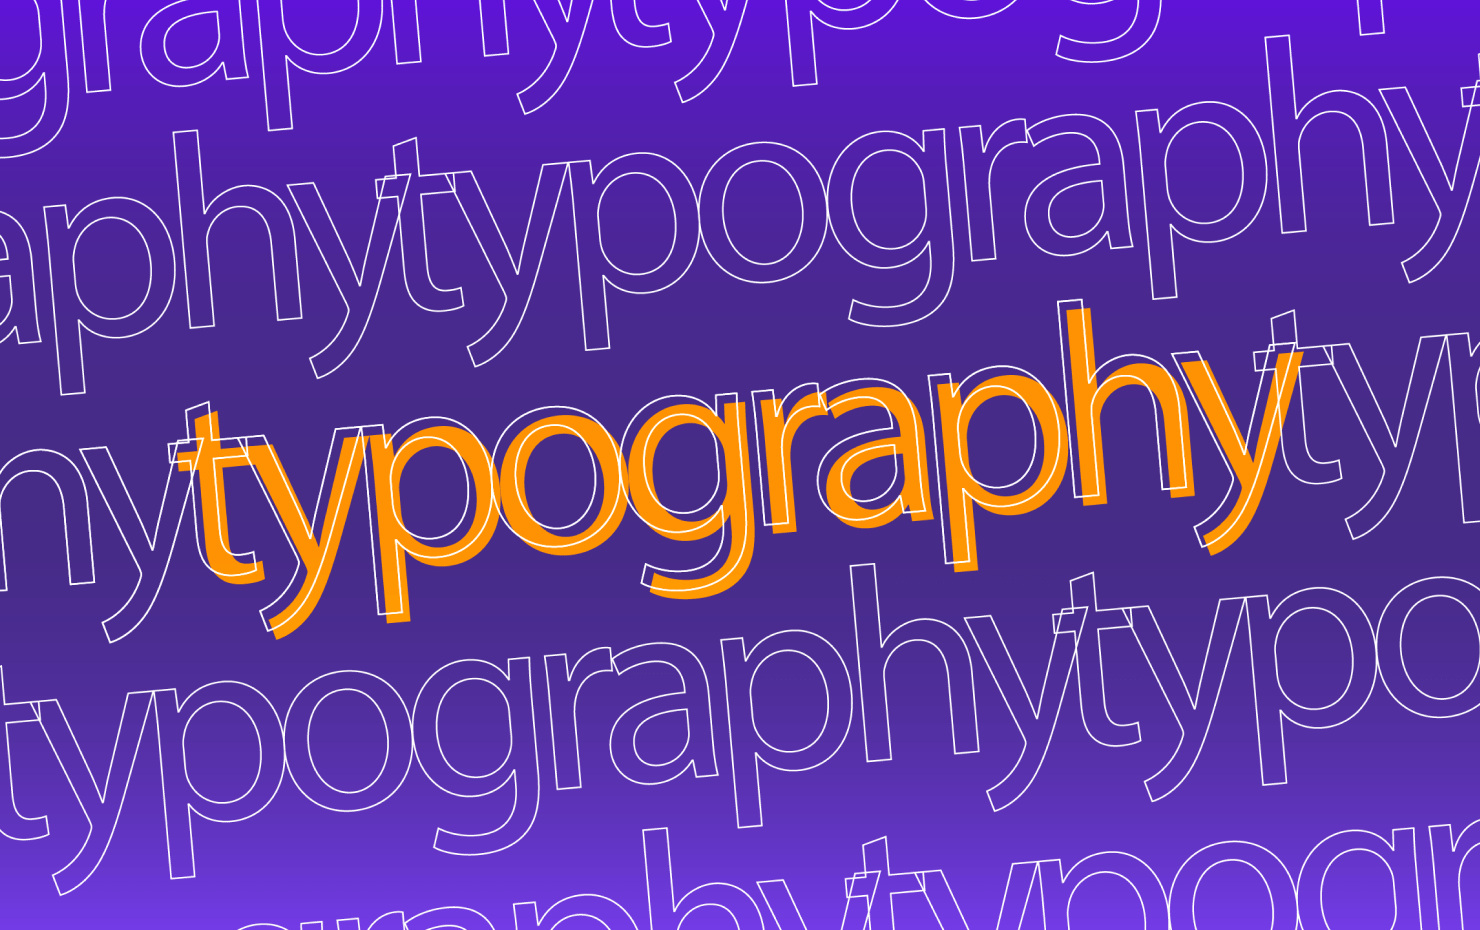 typography examples graphic design